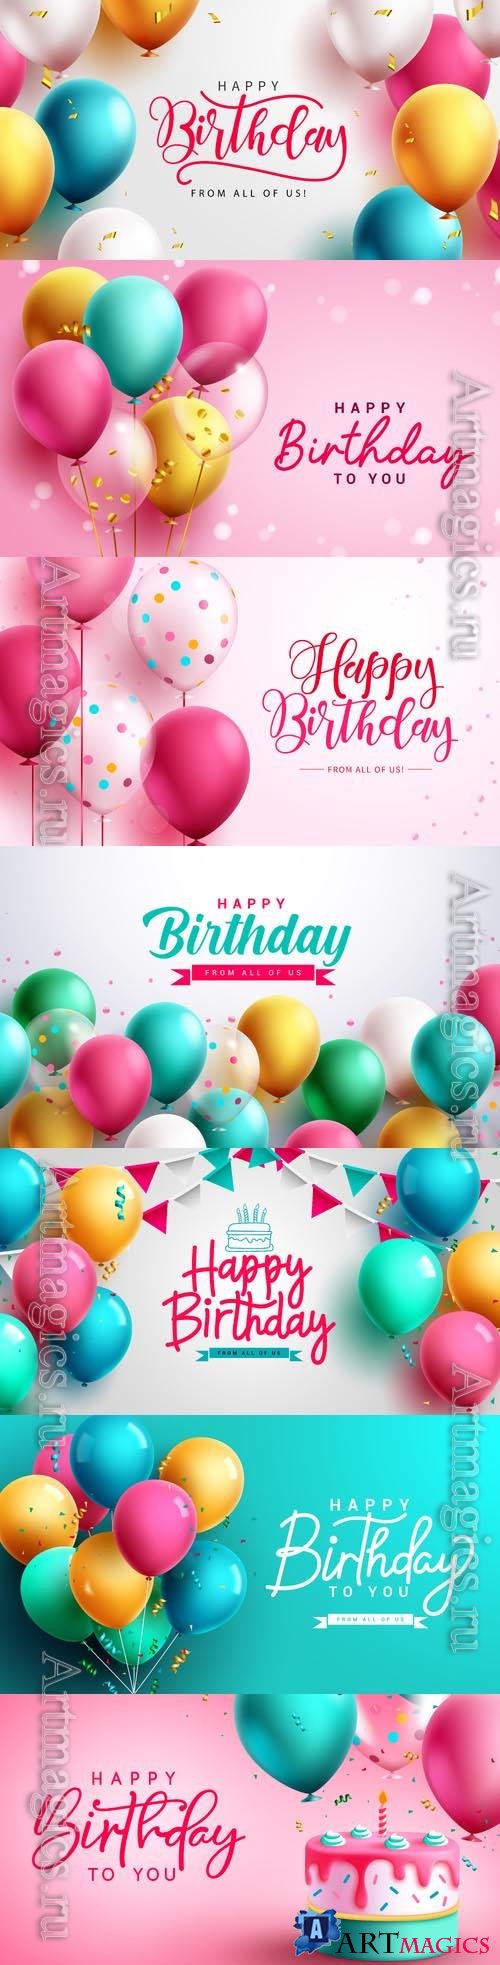 Happy birthday text vector design, birthday balloons party elements decoration